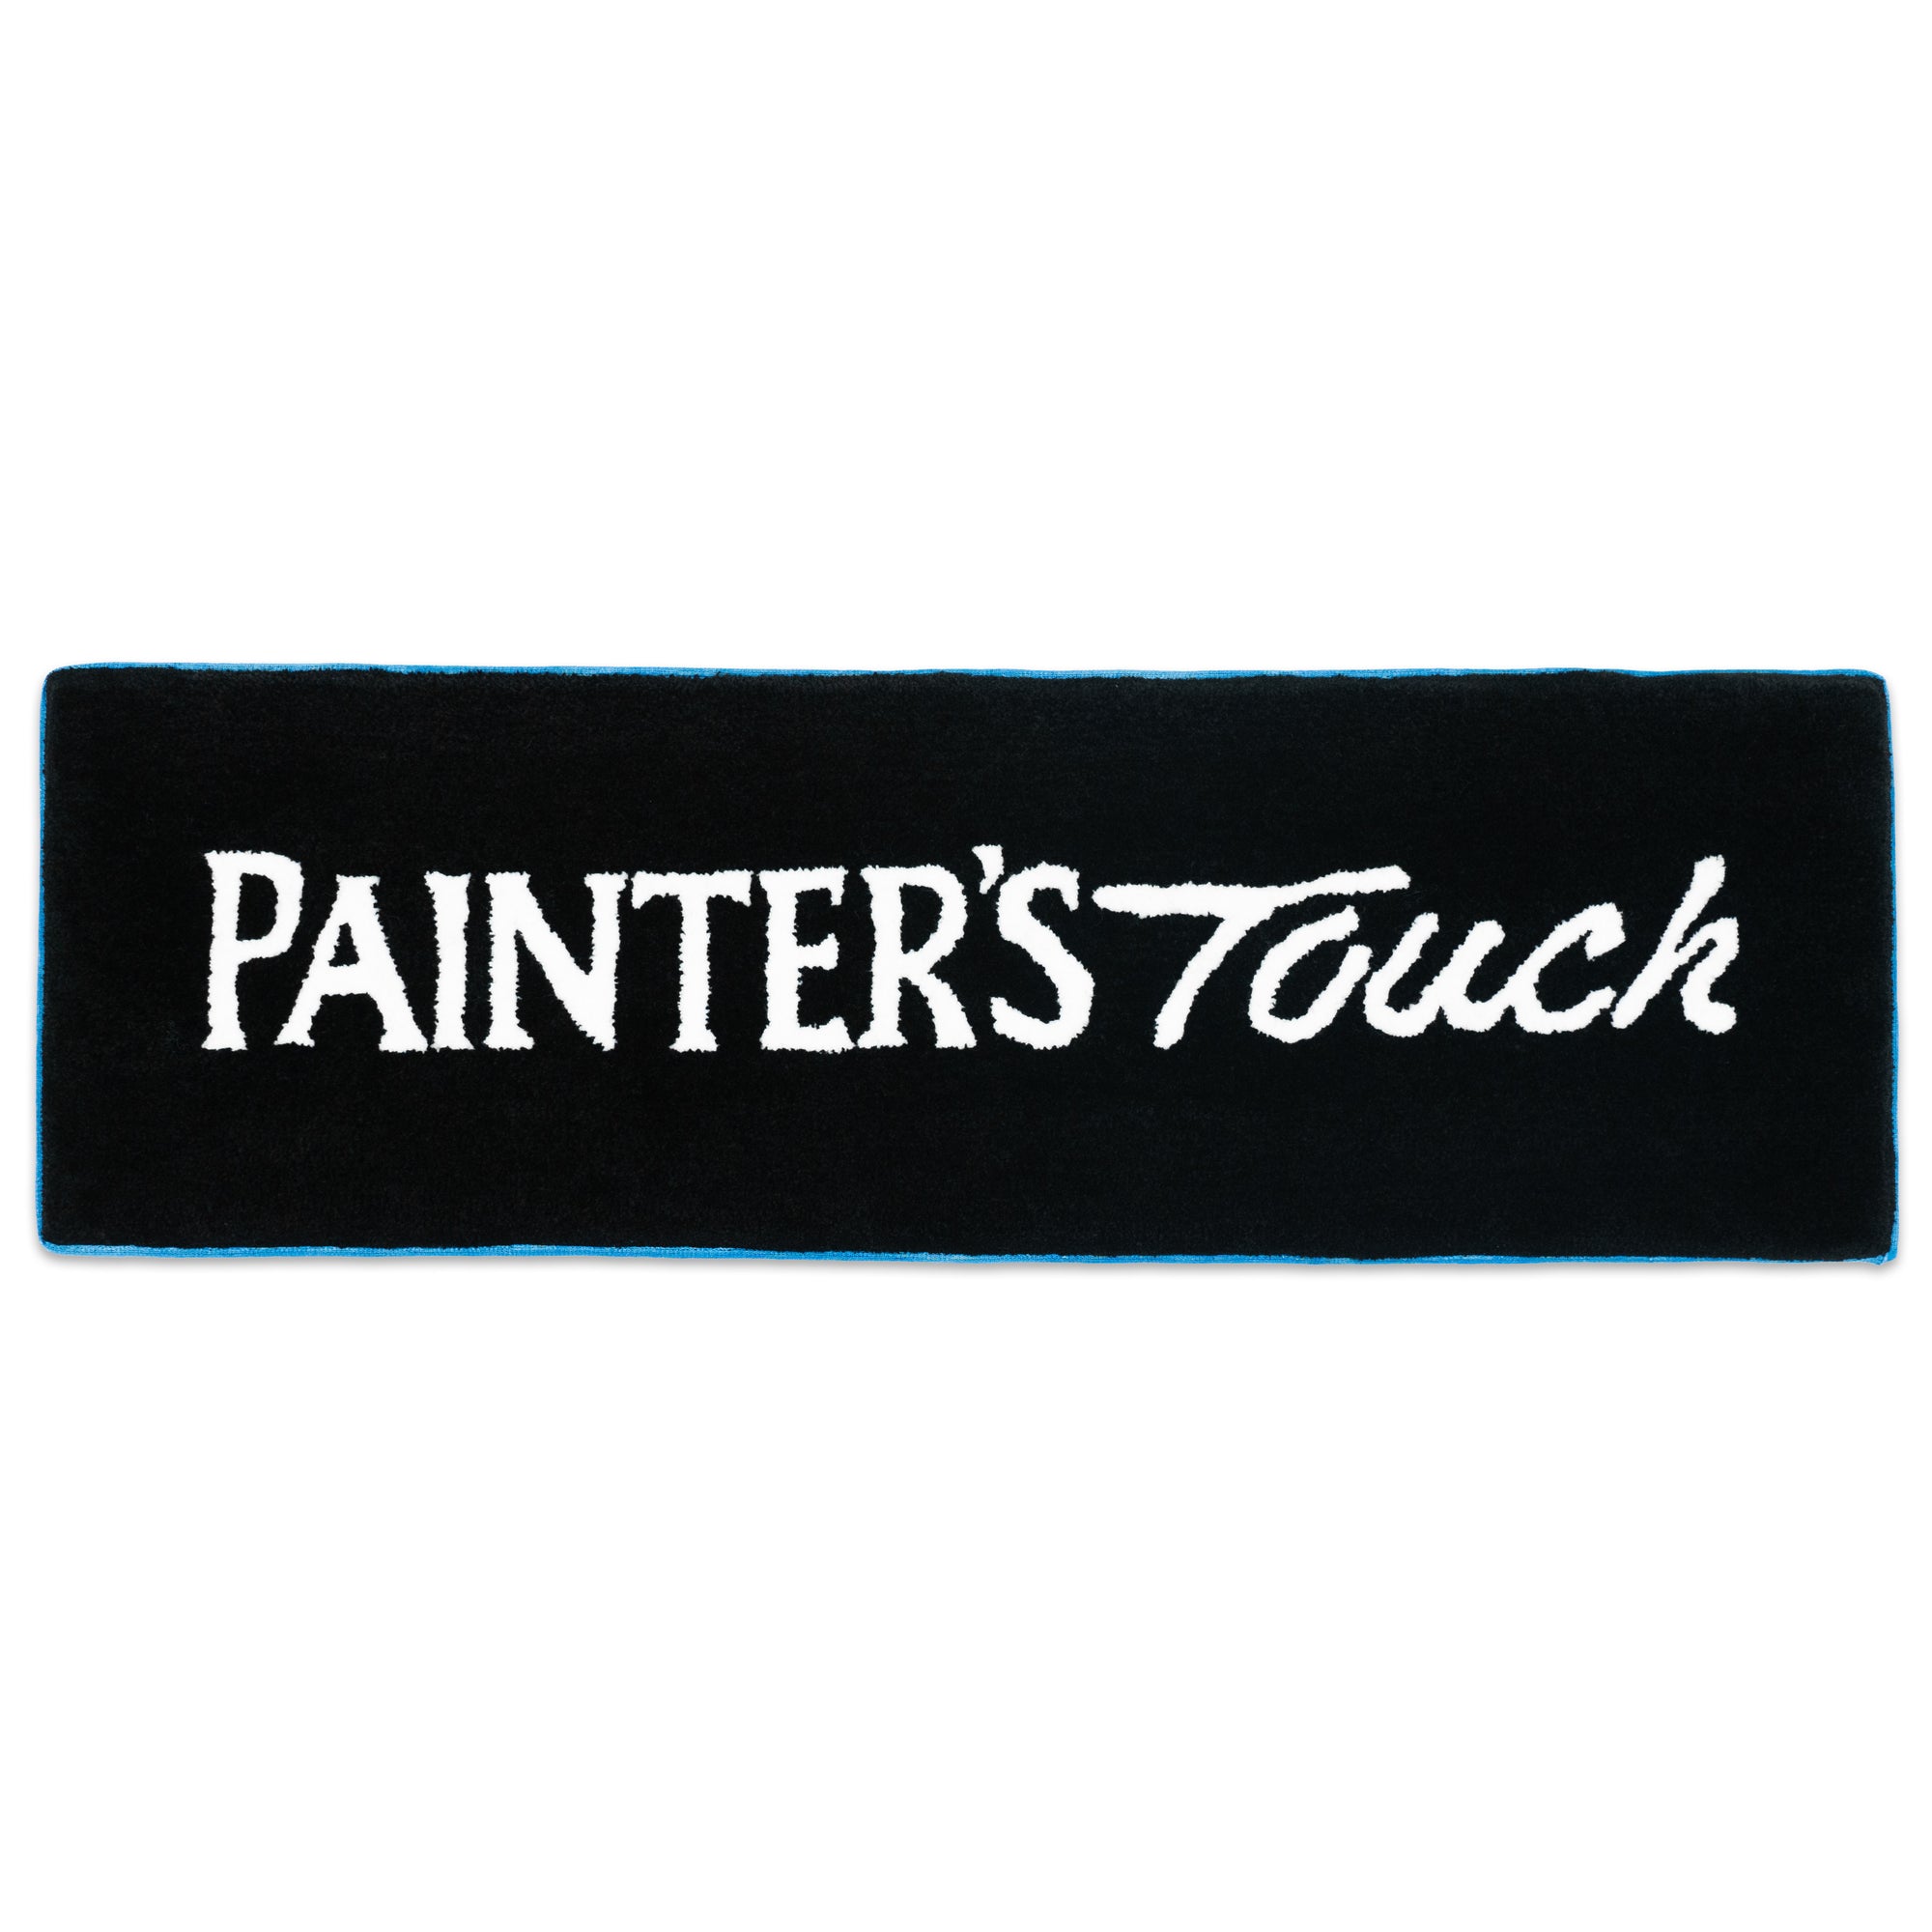 "Painter's Touch" Handmade Rug